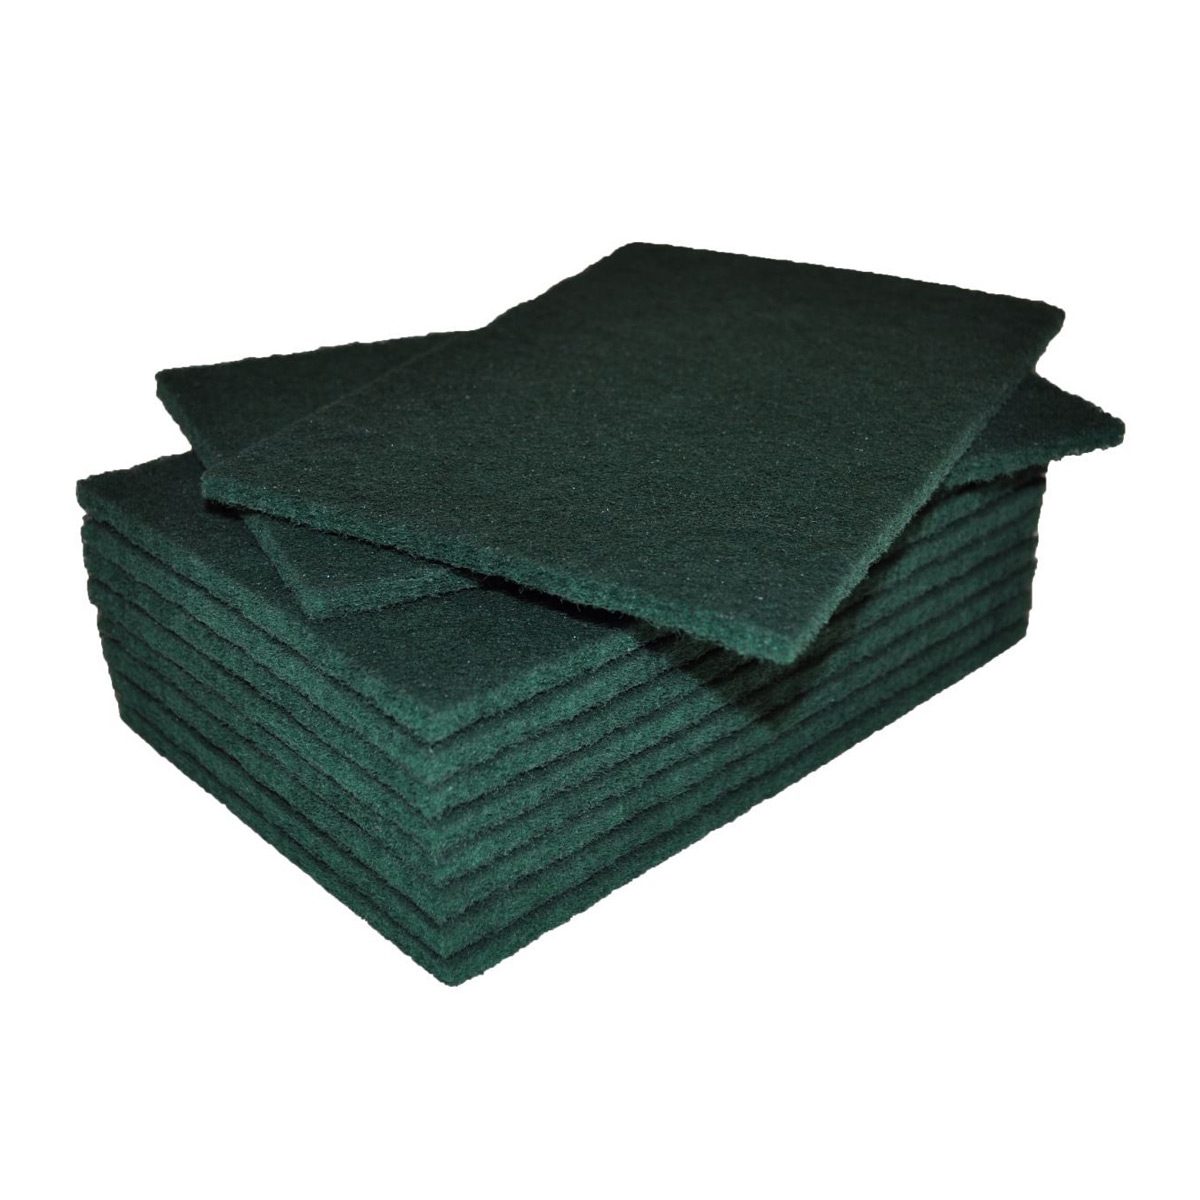 cleaning-equipment-cloths-scourers-wipes-mph33132-green-scotch-scour-pad-10pk-vjs-distributors-SCOTCH96